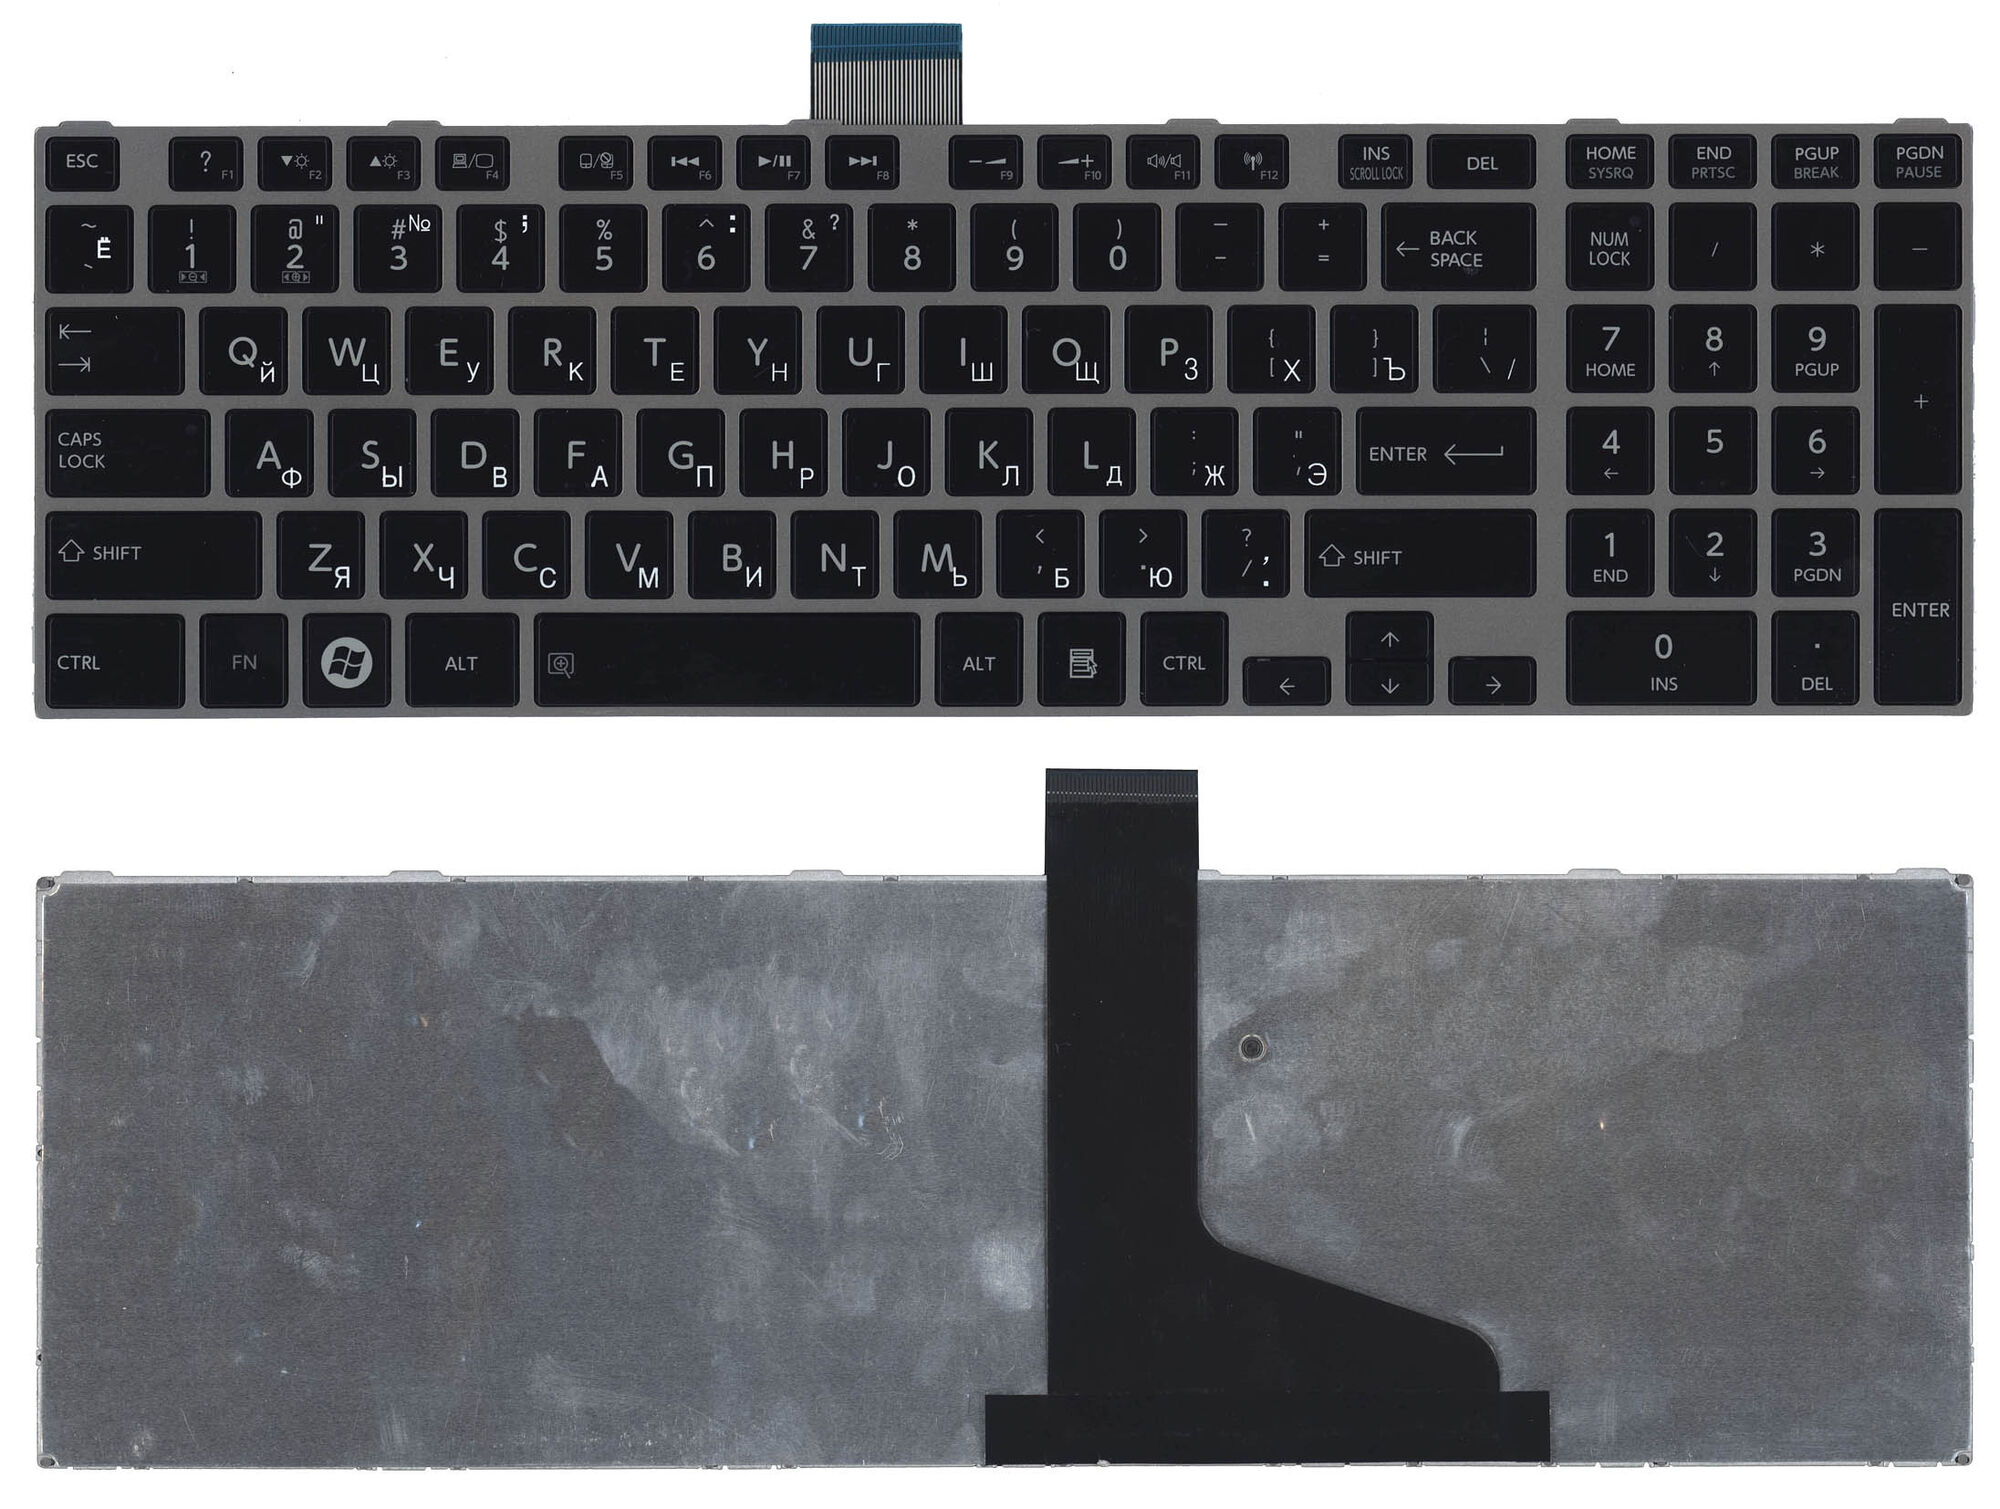 Клавиатура для ноутбука Toshiba C850 L850 cерая рамка p/n: NSK-TV0SV, NSK-TV0SU, NSK-TT0SV